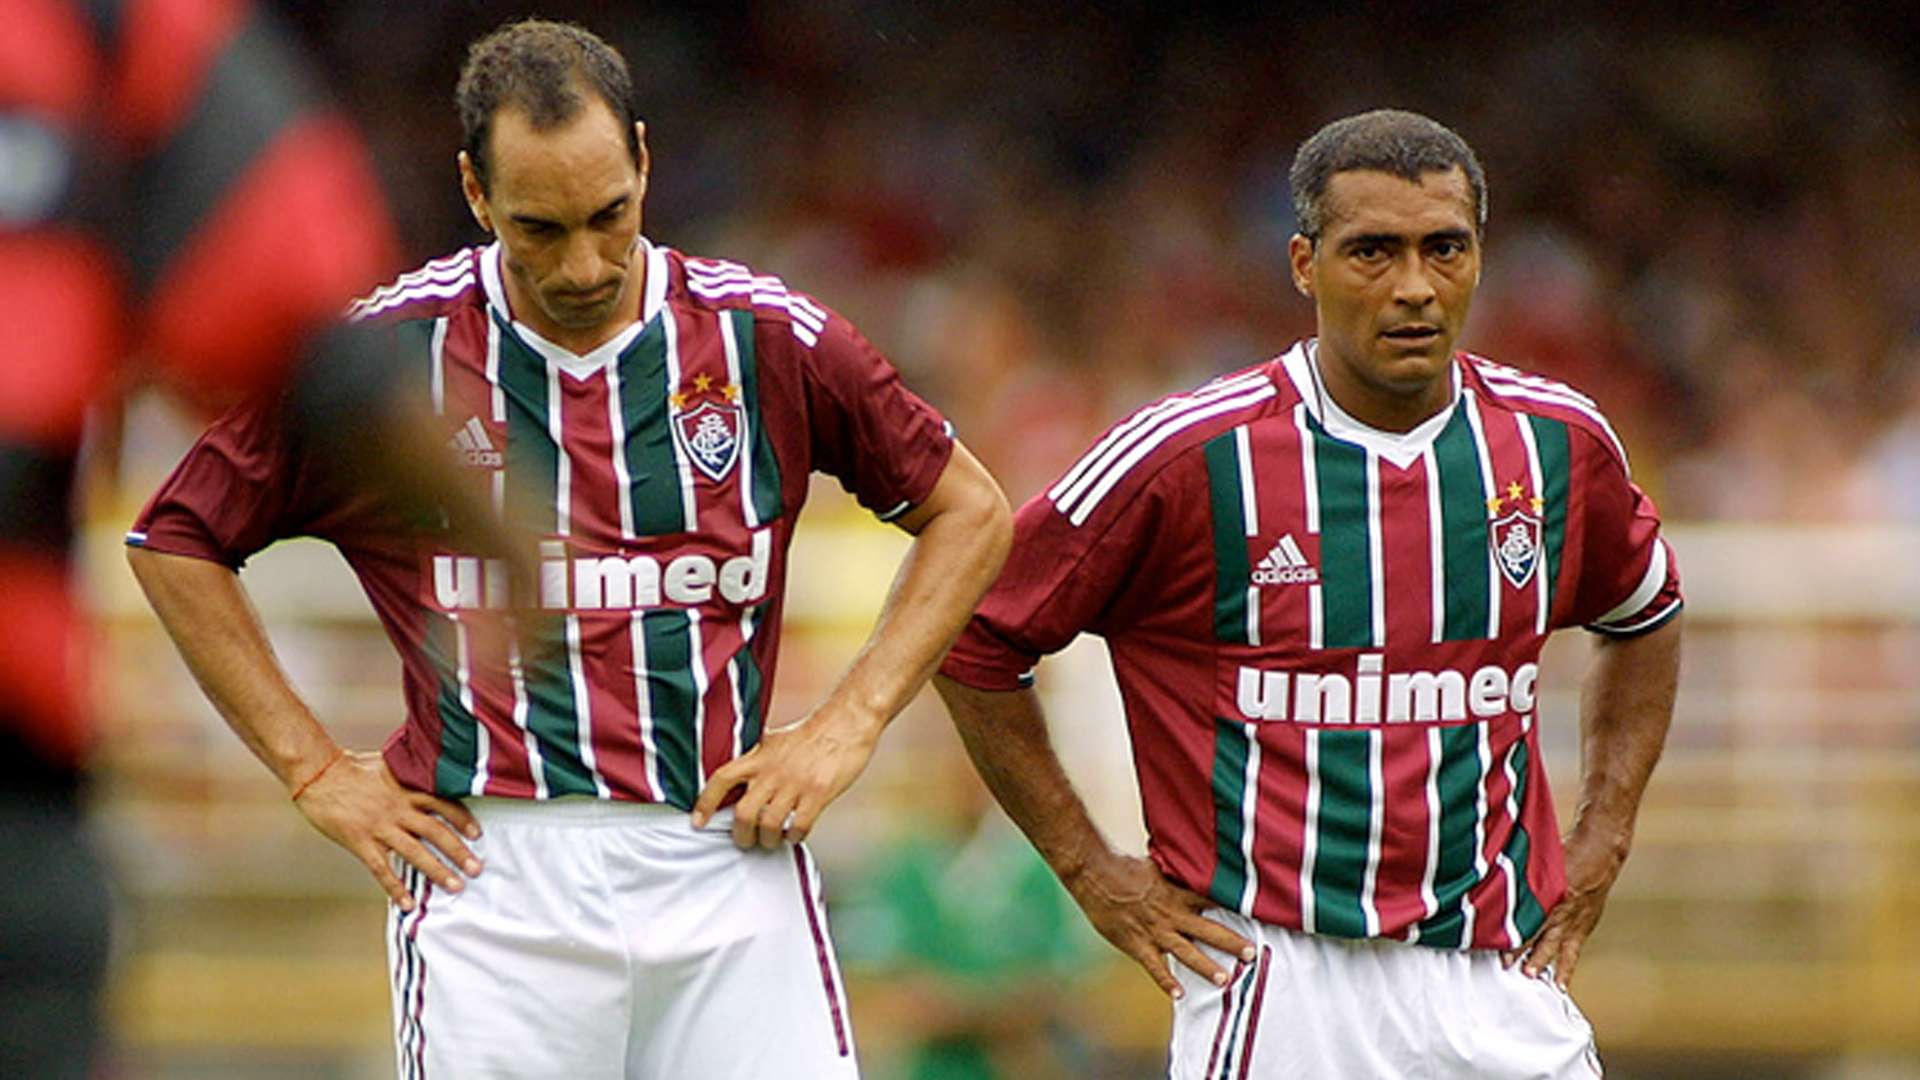 Edmundo e Romário Fluminense